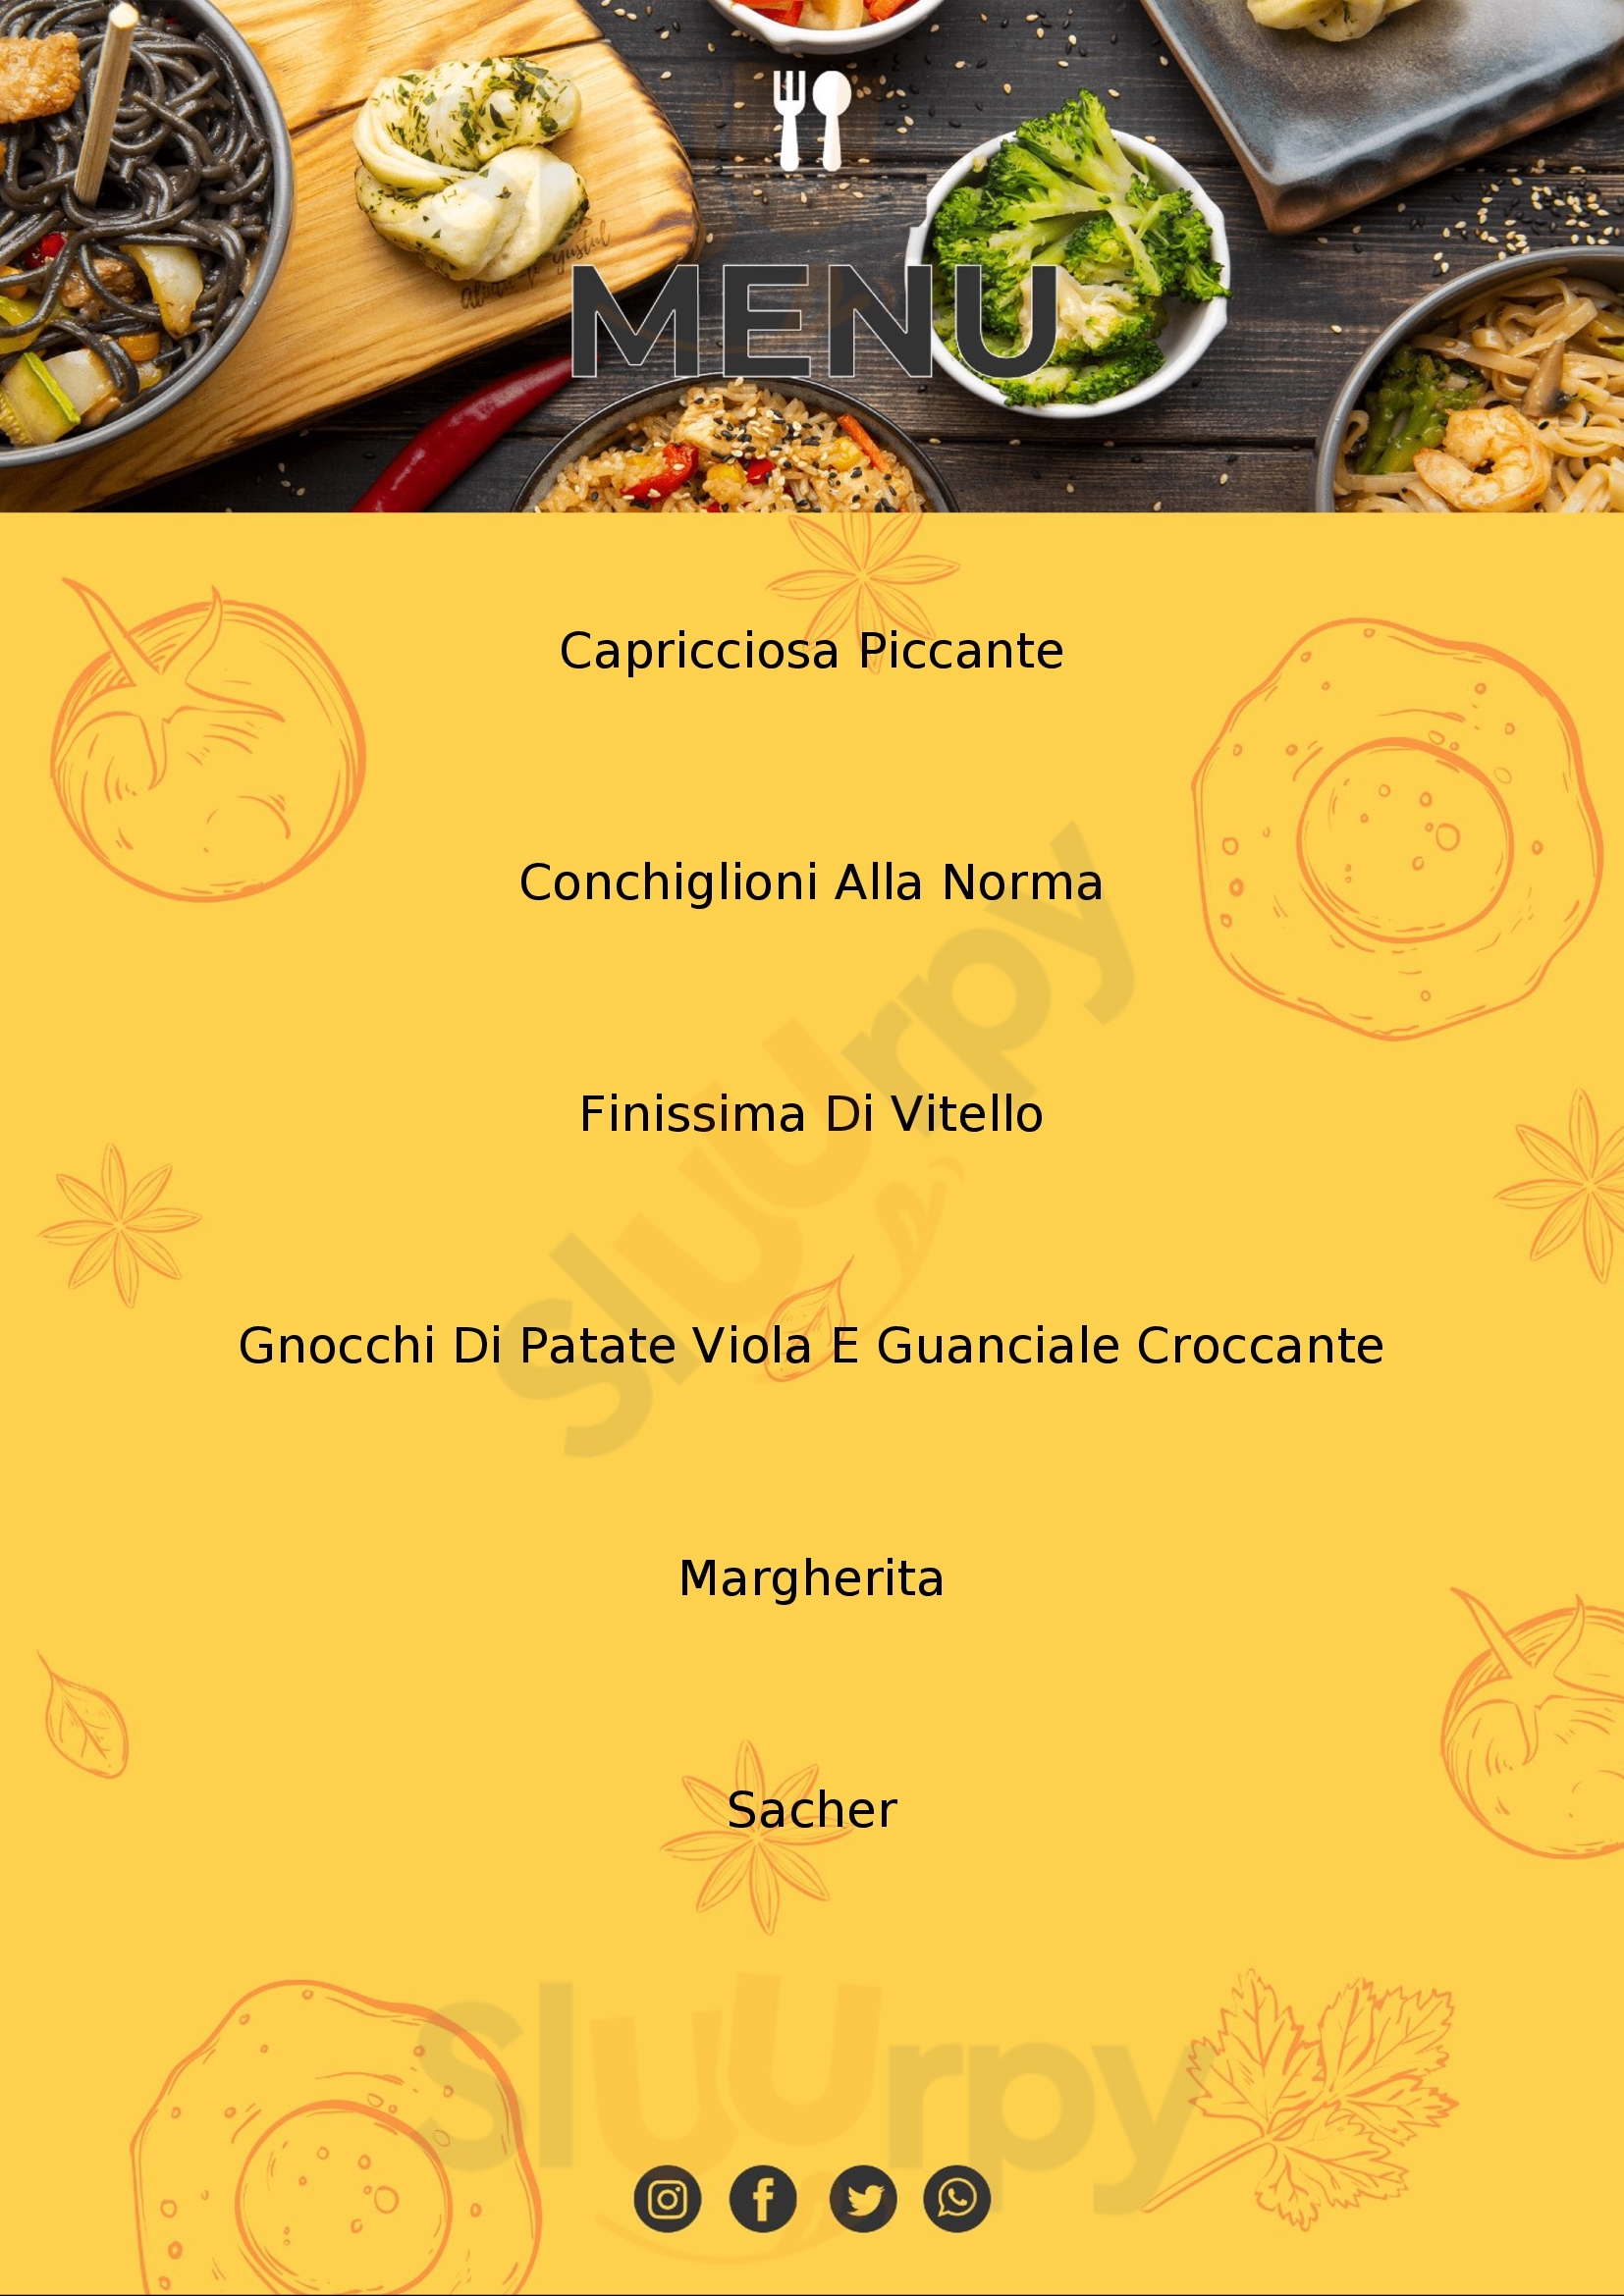 Unico Dinner Club Caselle Torinese menù 1 pagina